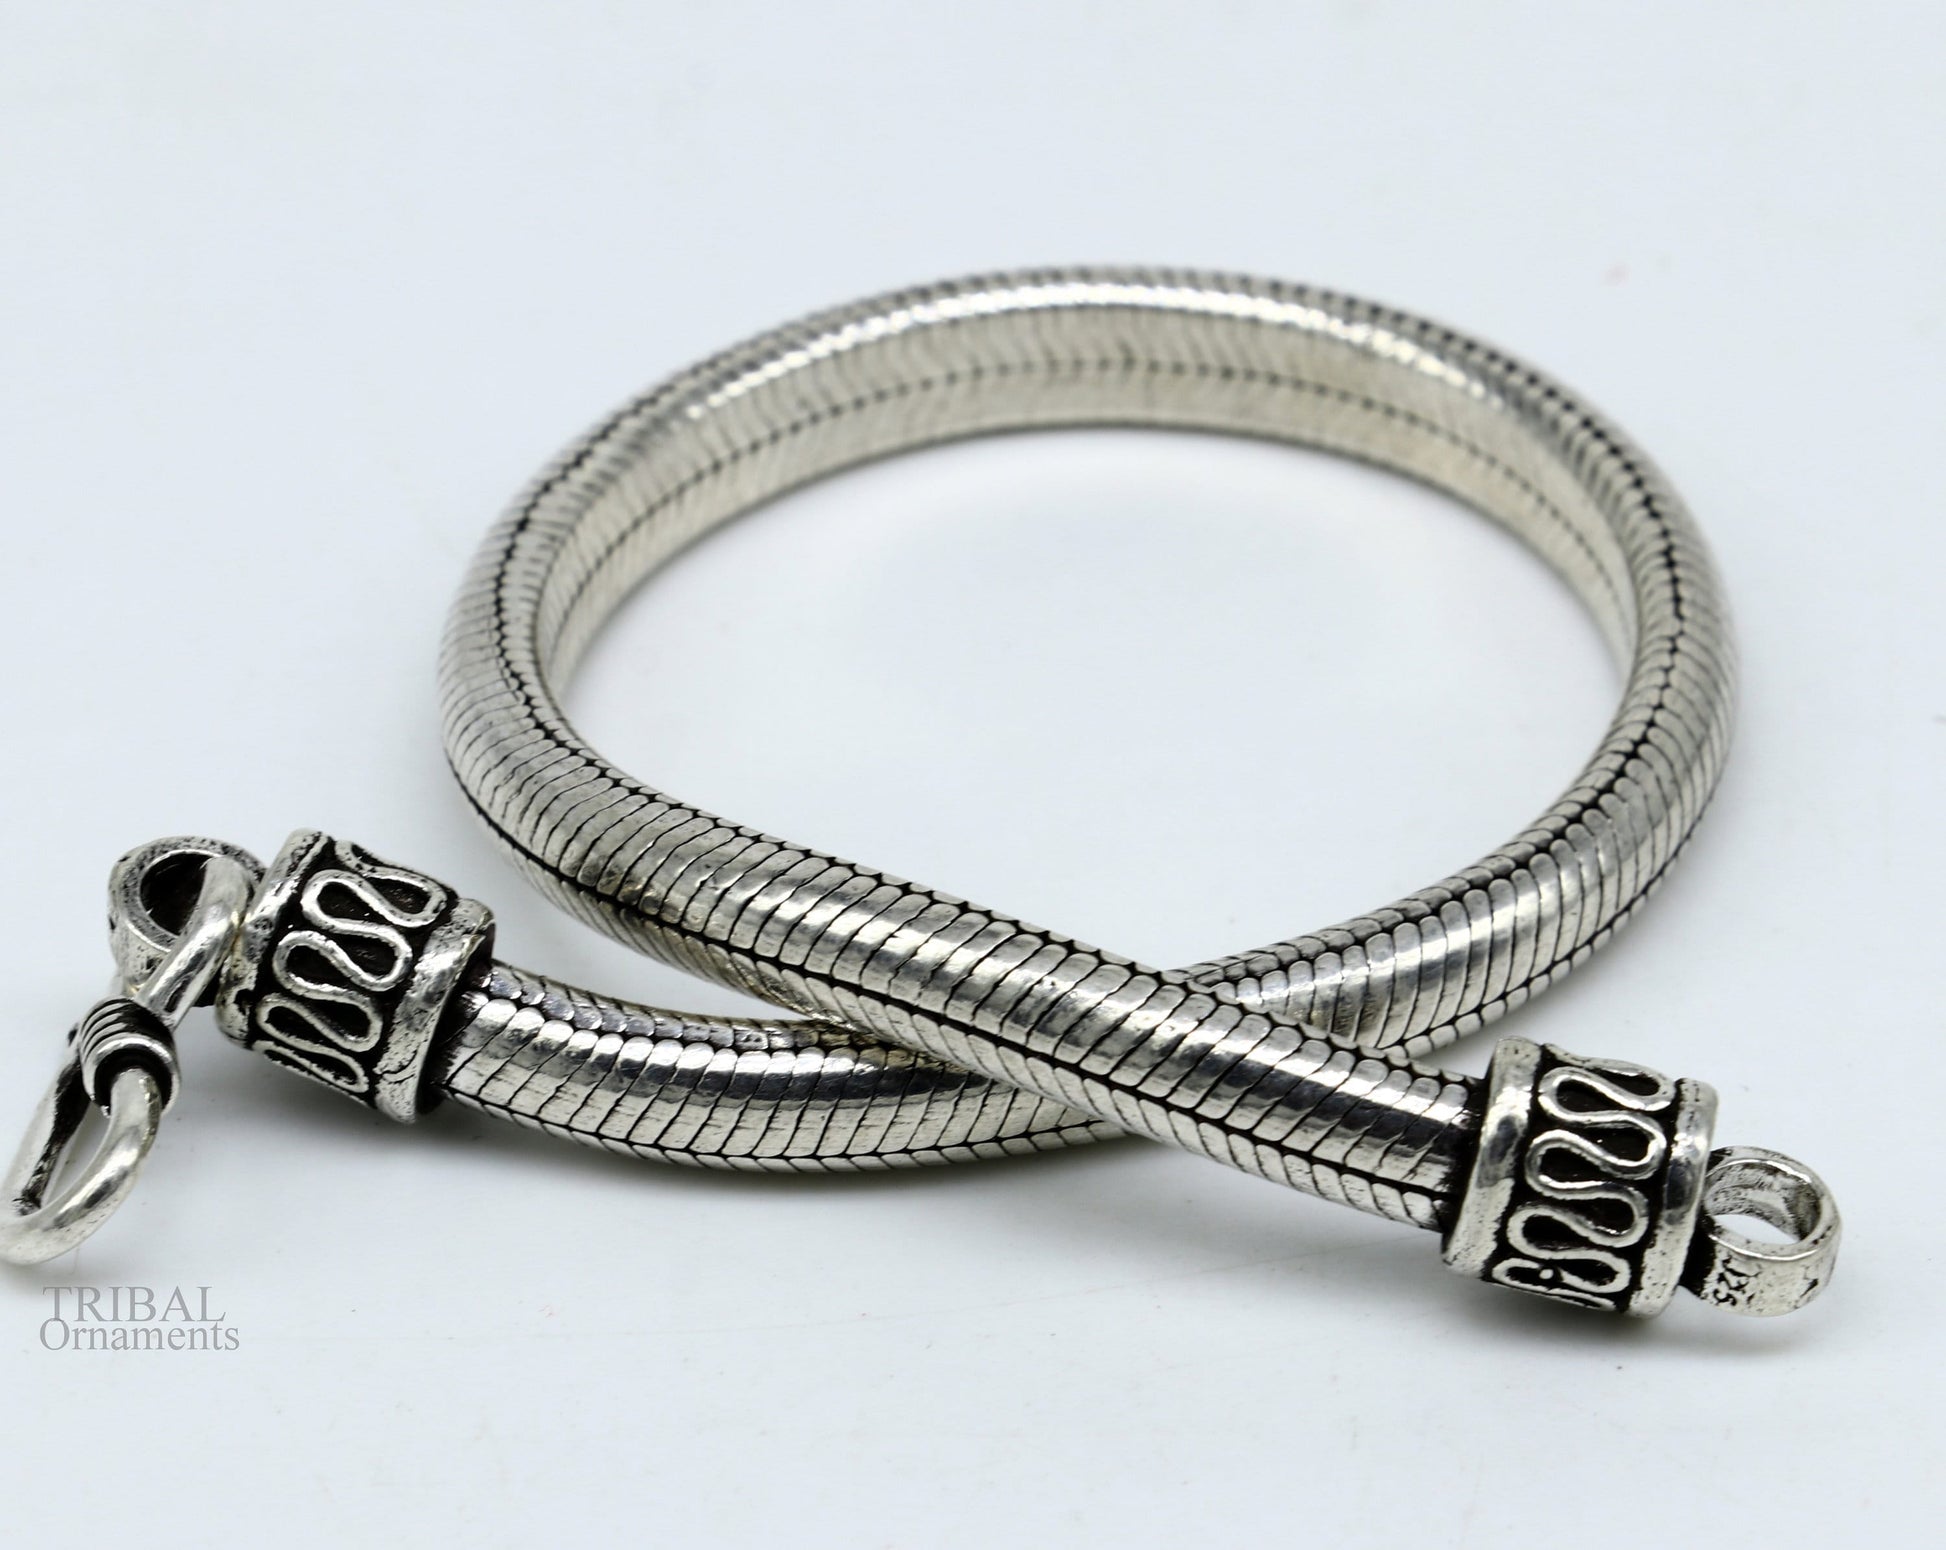 5.5mm 925 sterling silver handmade snake chain bracelet, D shape chain bracelet, half round snake chain bracelet stylish jewelry sbr261 - TRIBAL ORNAMENTS